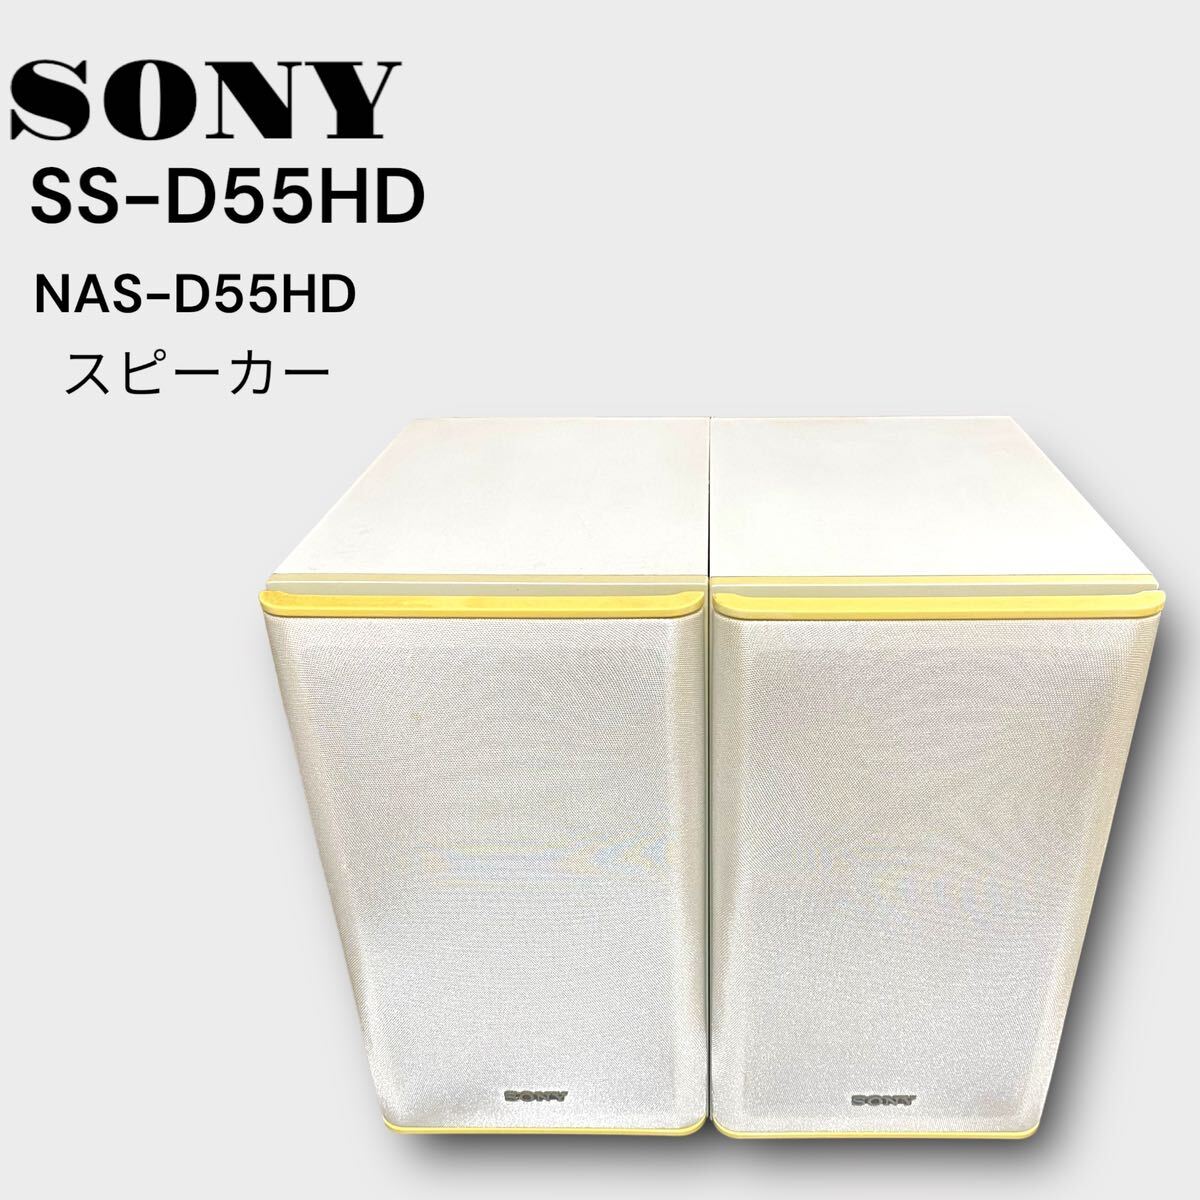 SS-D55HD speaker Sony hard disk audio recorder white NAS-D55HD W